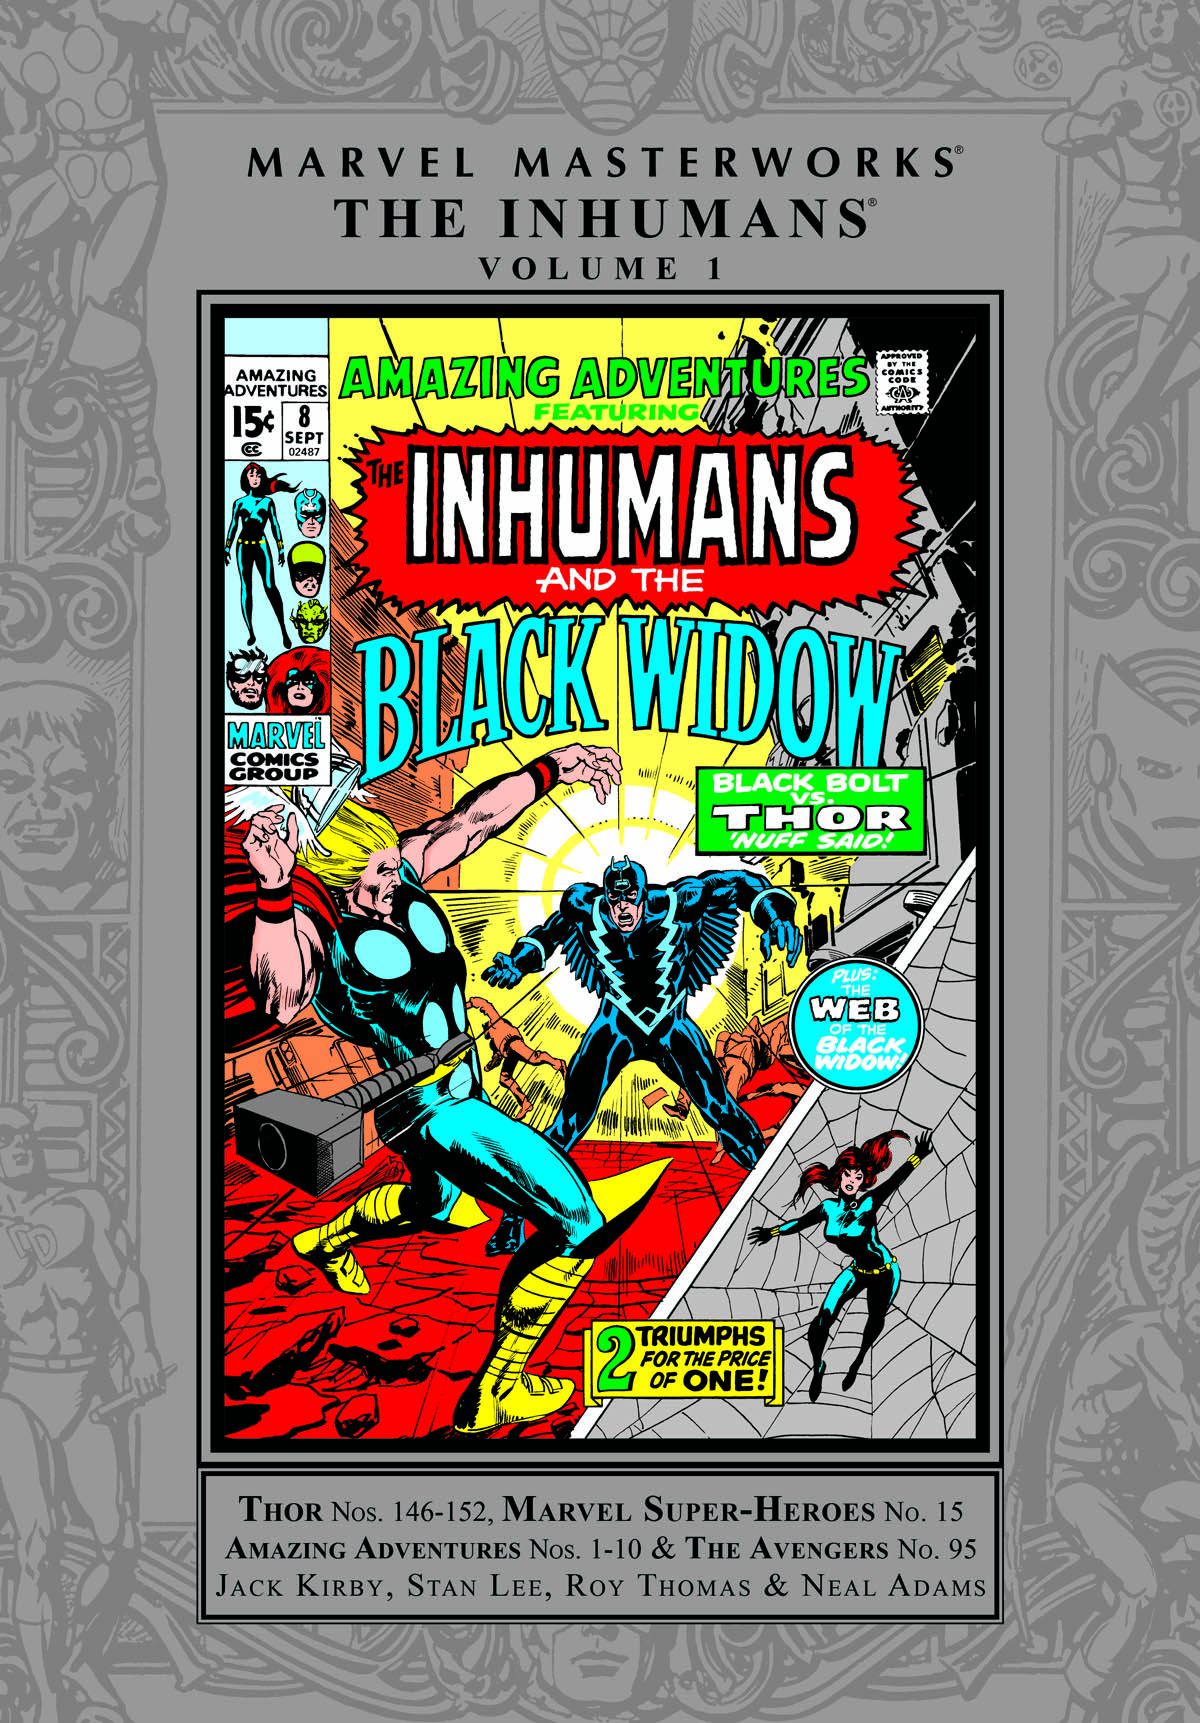 Marvel Masterworks: The Inhumans Vol. 1 (Trade Paperback)